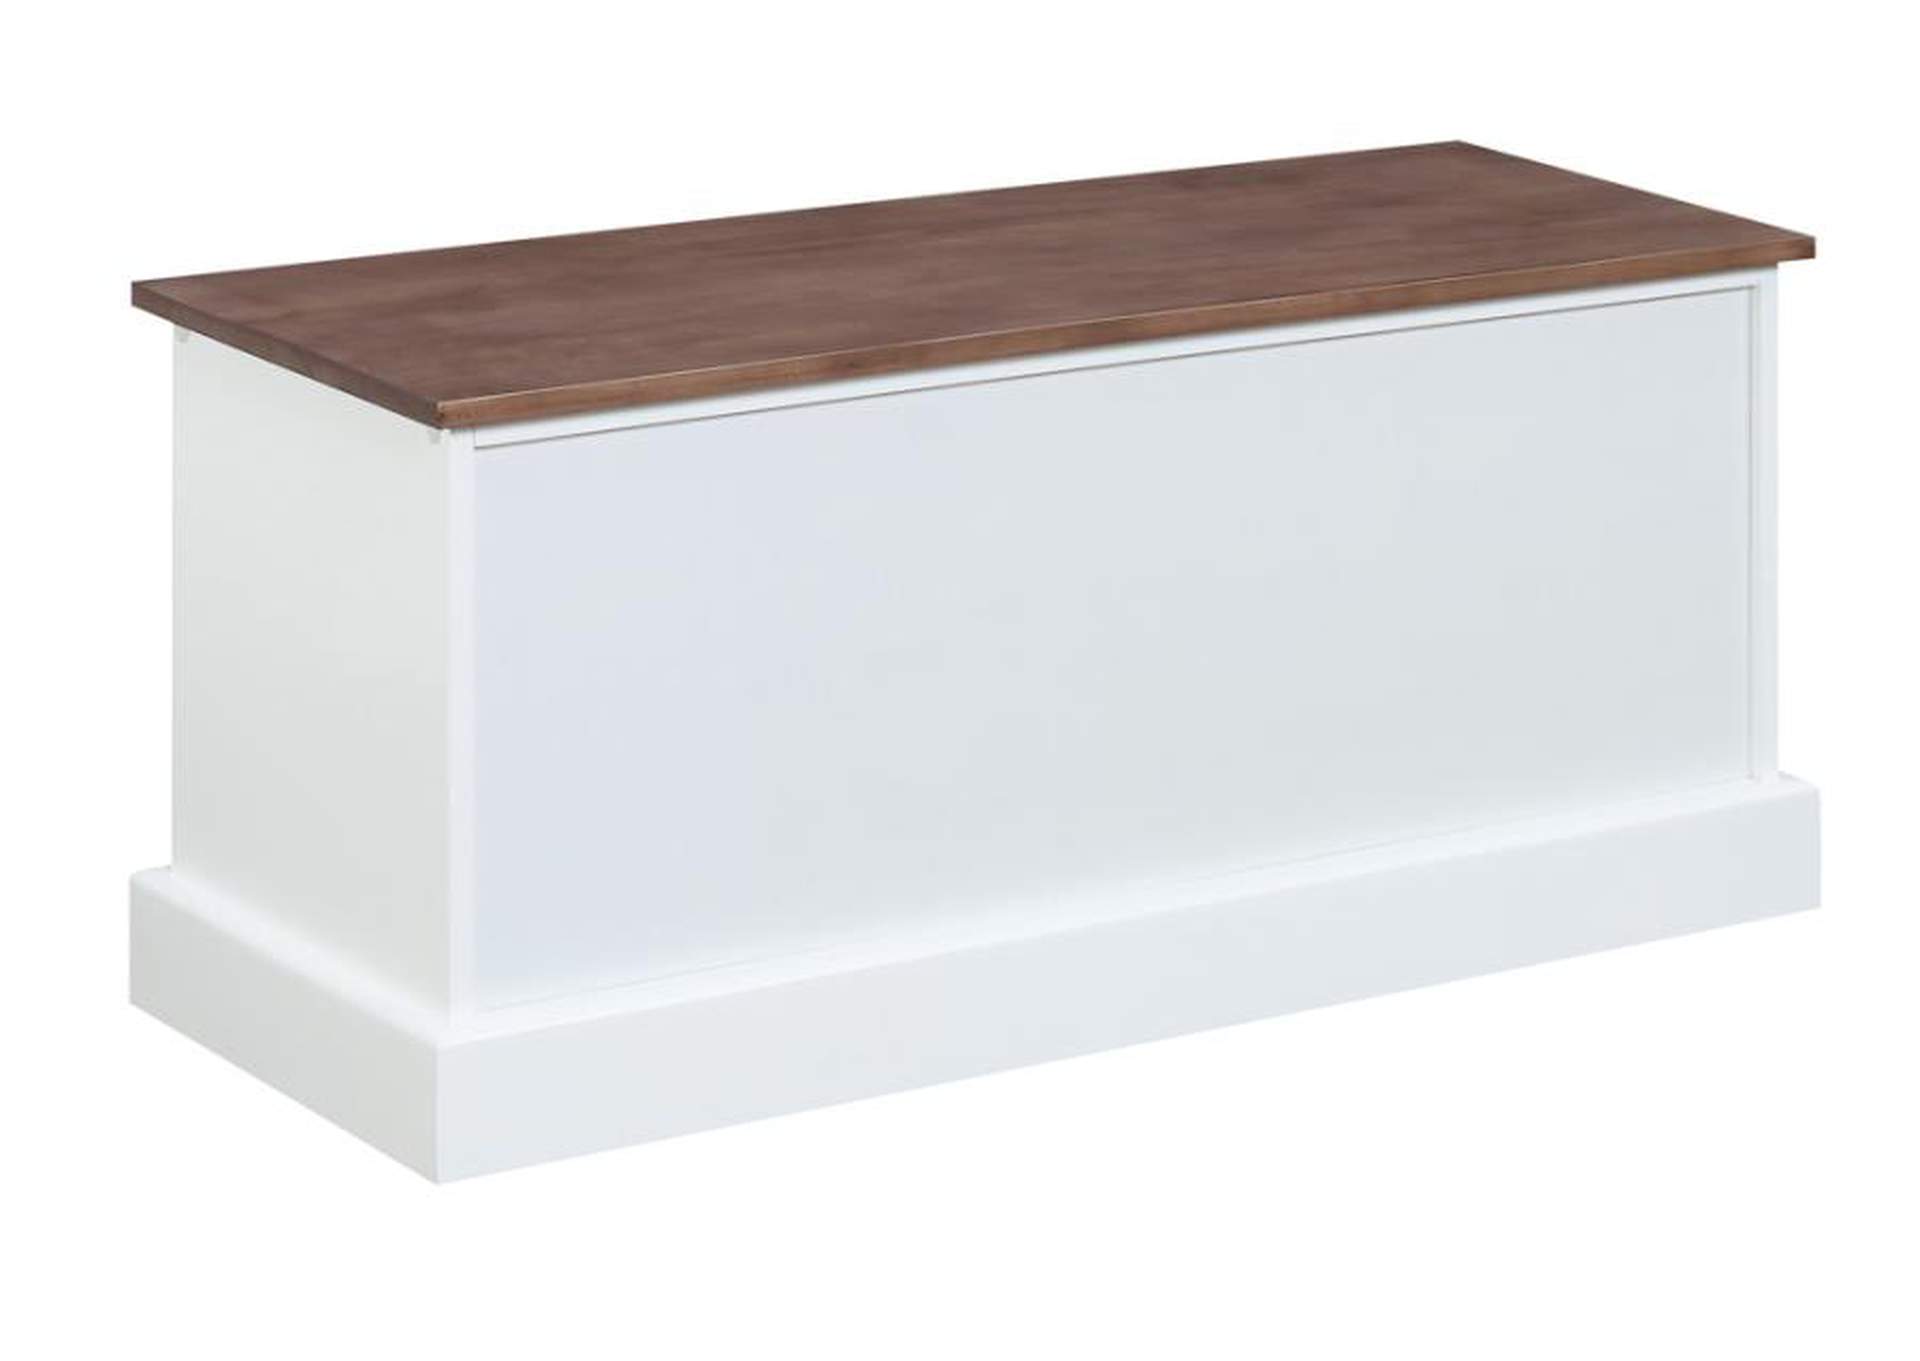 Alma 3-Drawer Storage Bench Weathered Brown And White,Coaster Furniture